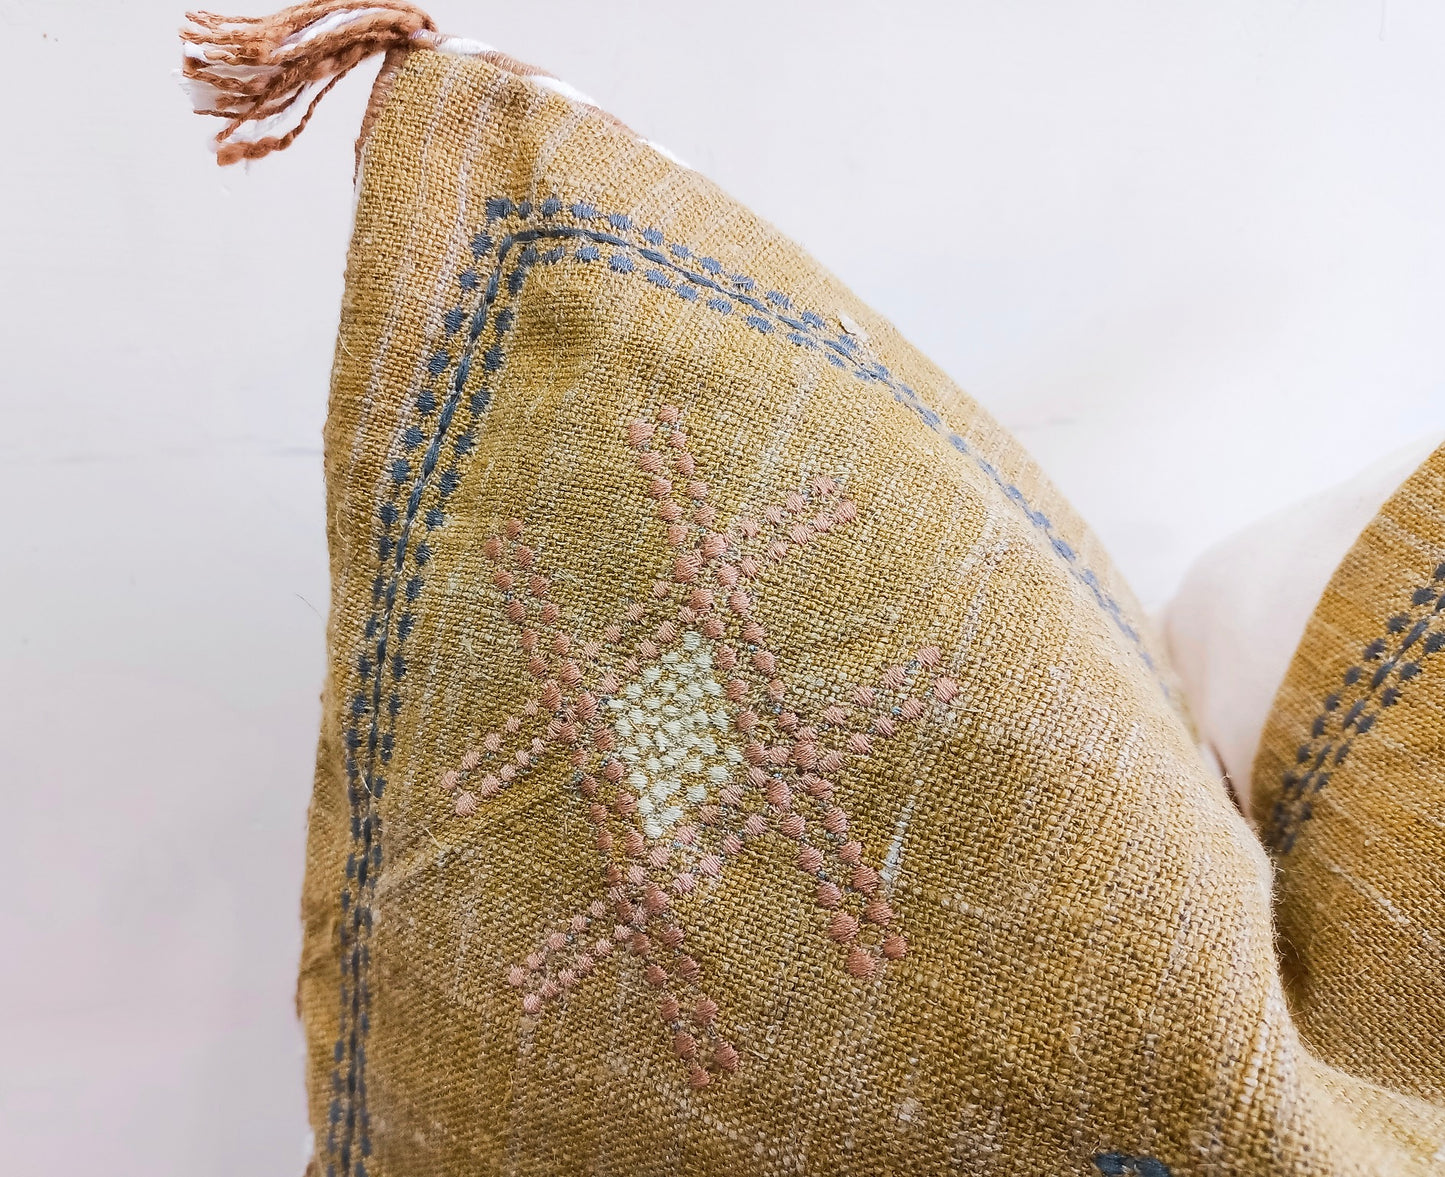 Set of 2 Mustard Color Cactus Silk Inspired Handmade Linen Pillow Cover